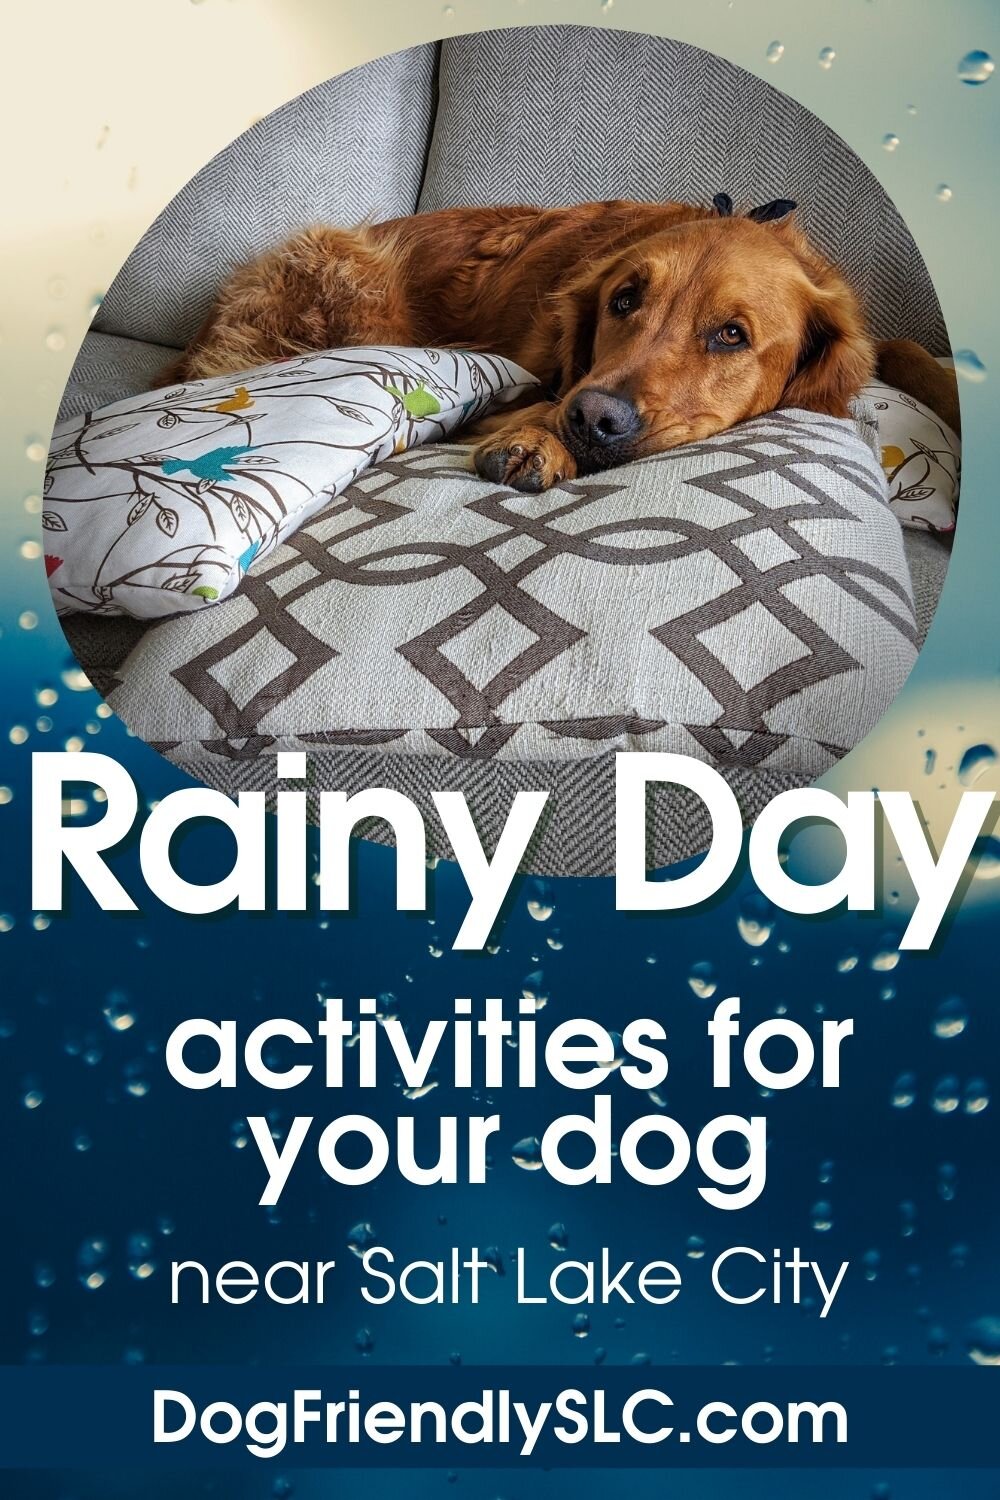 Dog Friendly SLC Rainy Day Guide